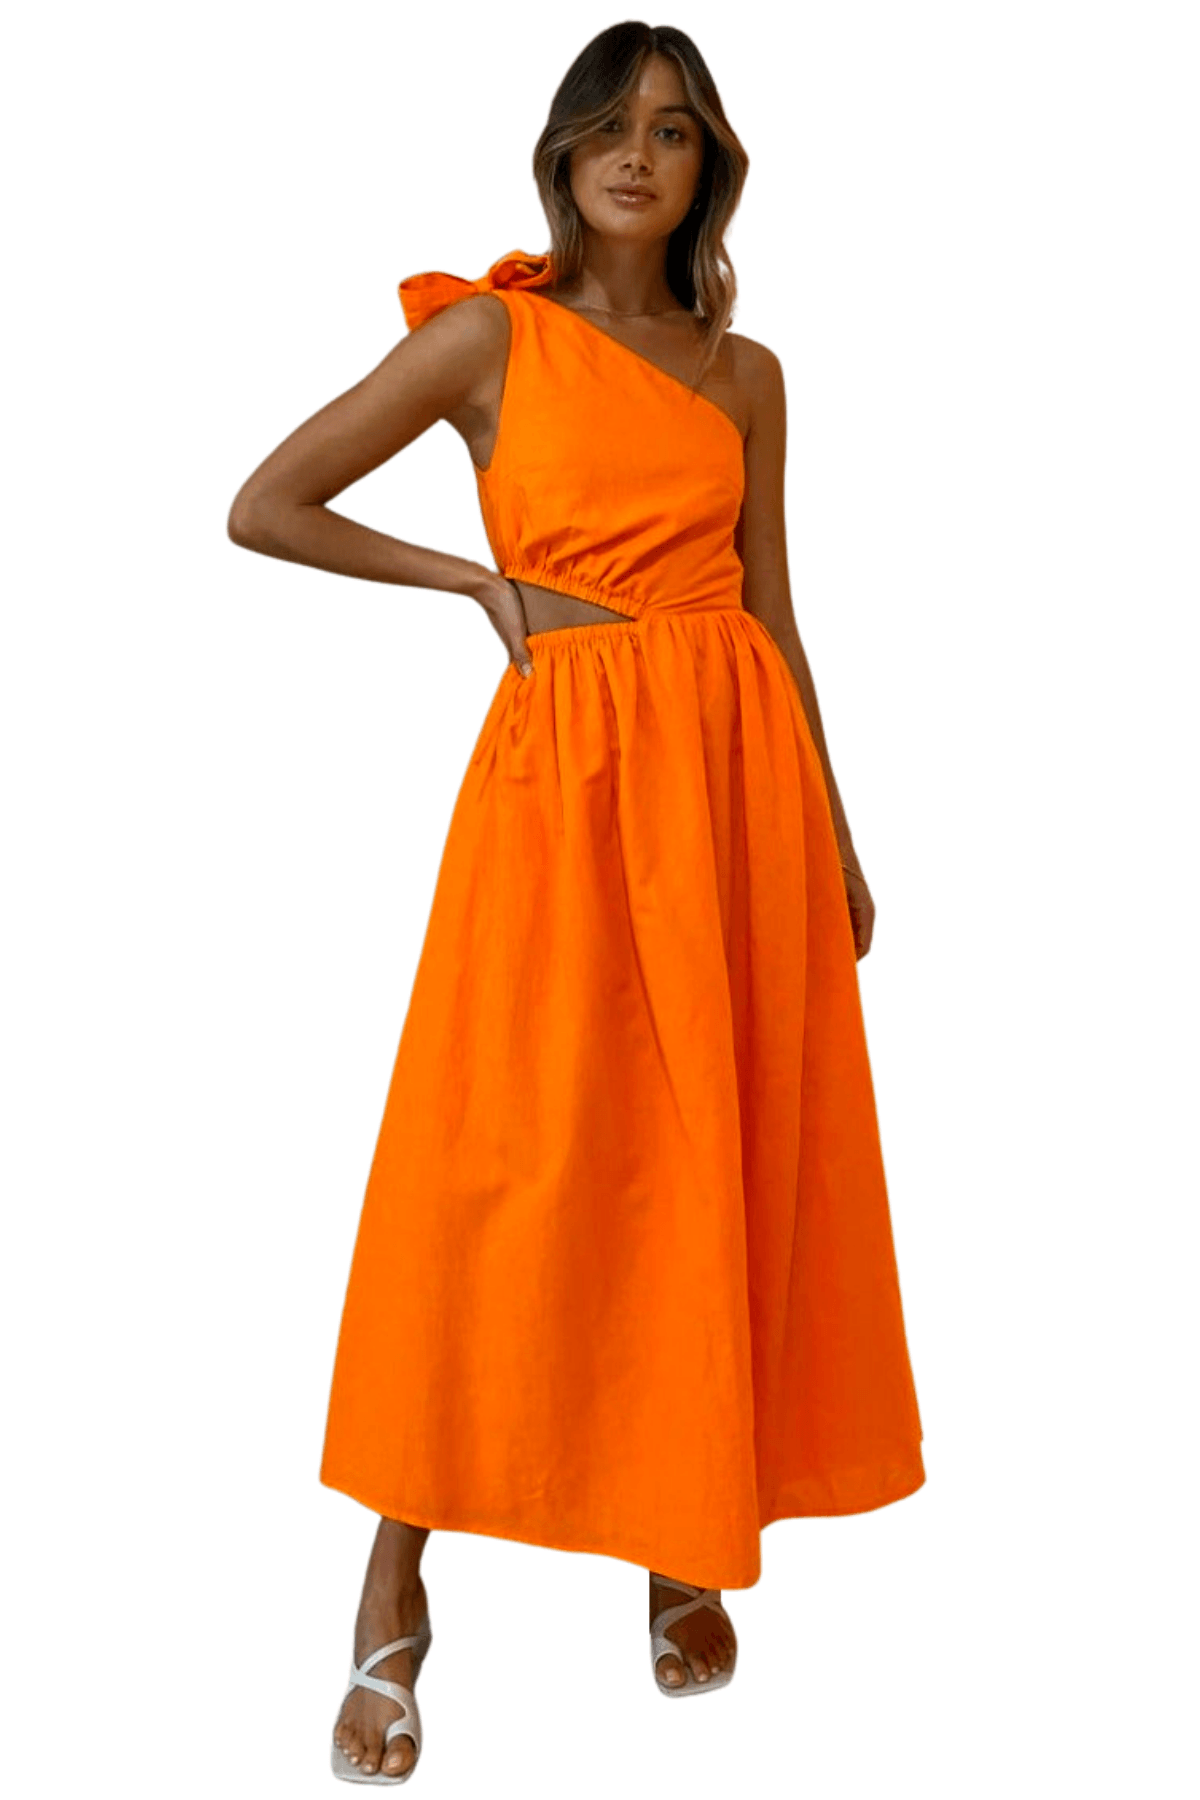 By Nicola BY NICOLA Gabriella One Shoulder Midi Dress (Sunkissed Orange) - by-nicola-gabriella-one-shoulder-midi-dress-sunkissed-orange-dress-for-a-night-30754143.png